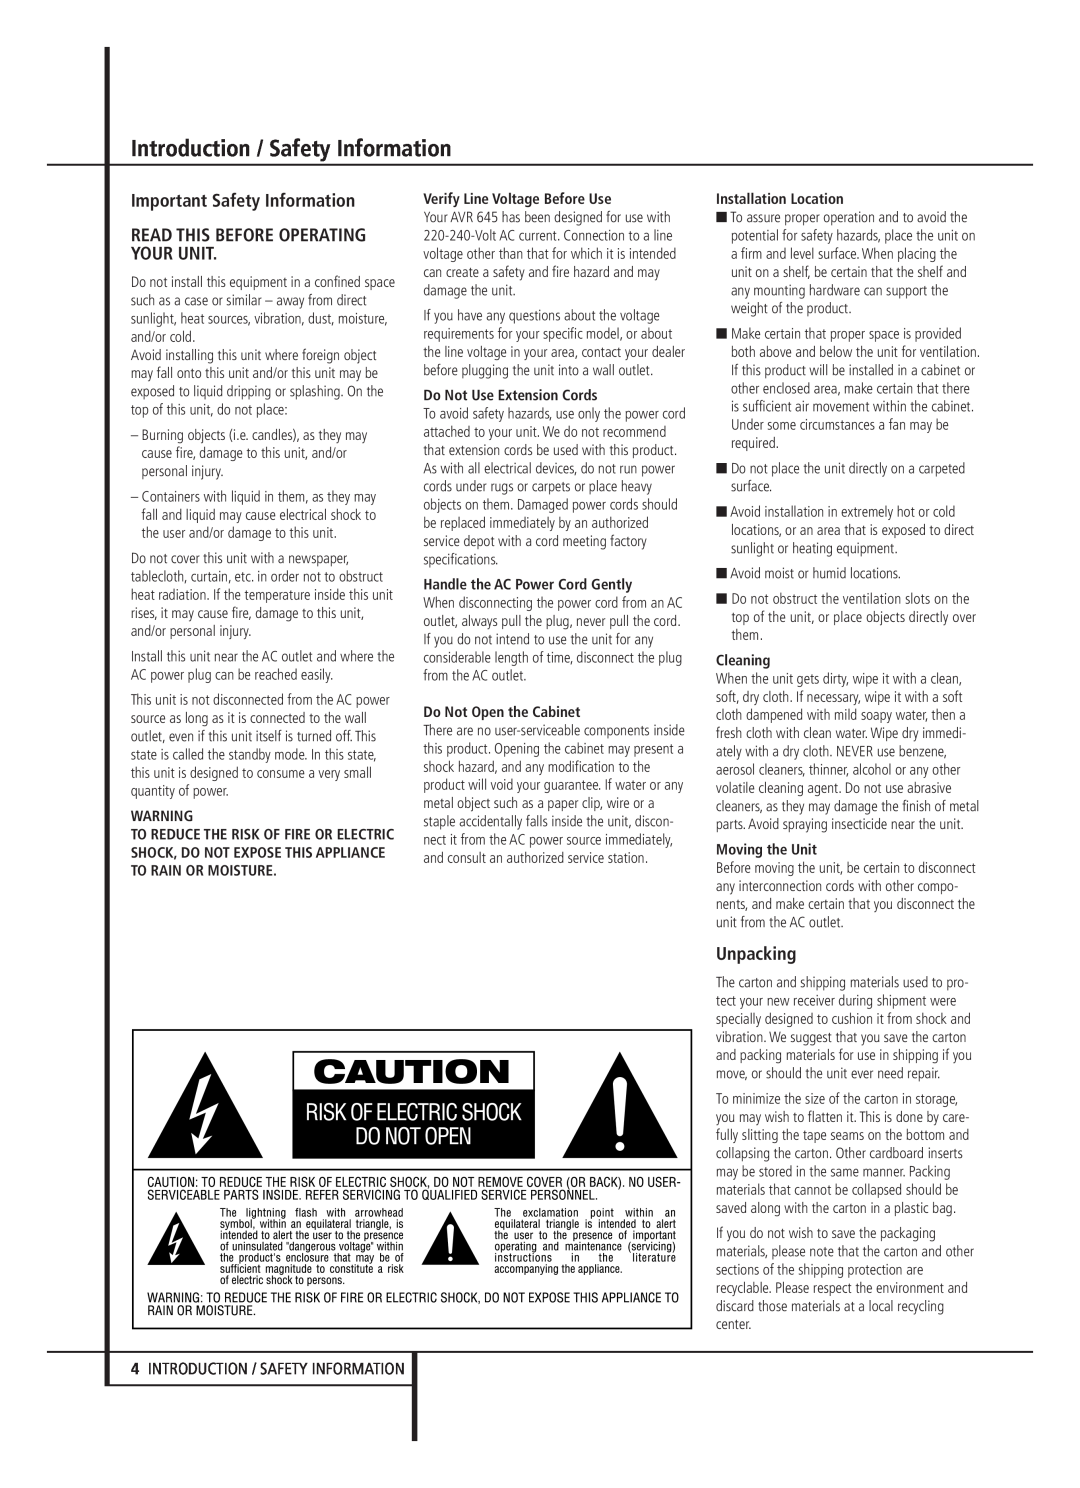 Harman-Kardon AVR 645 Introduction / Safety Information, Important Safety Information, Unpacking, Do Not Open the Cabinet 